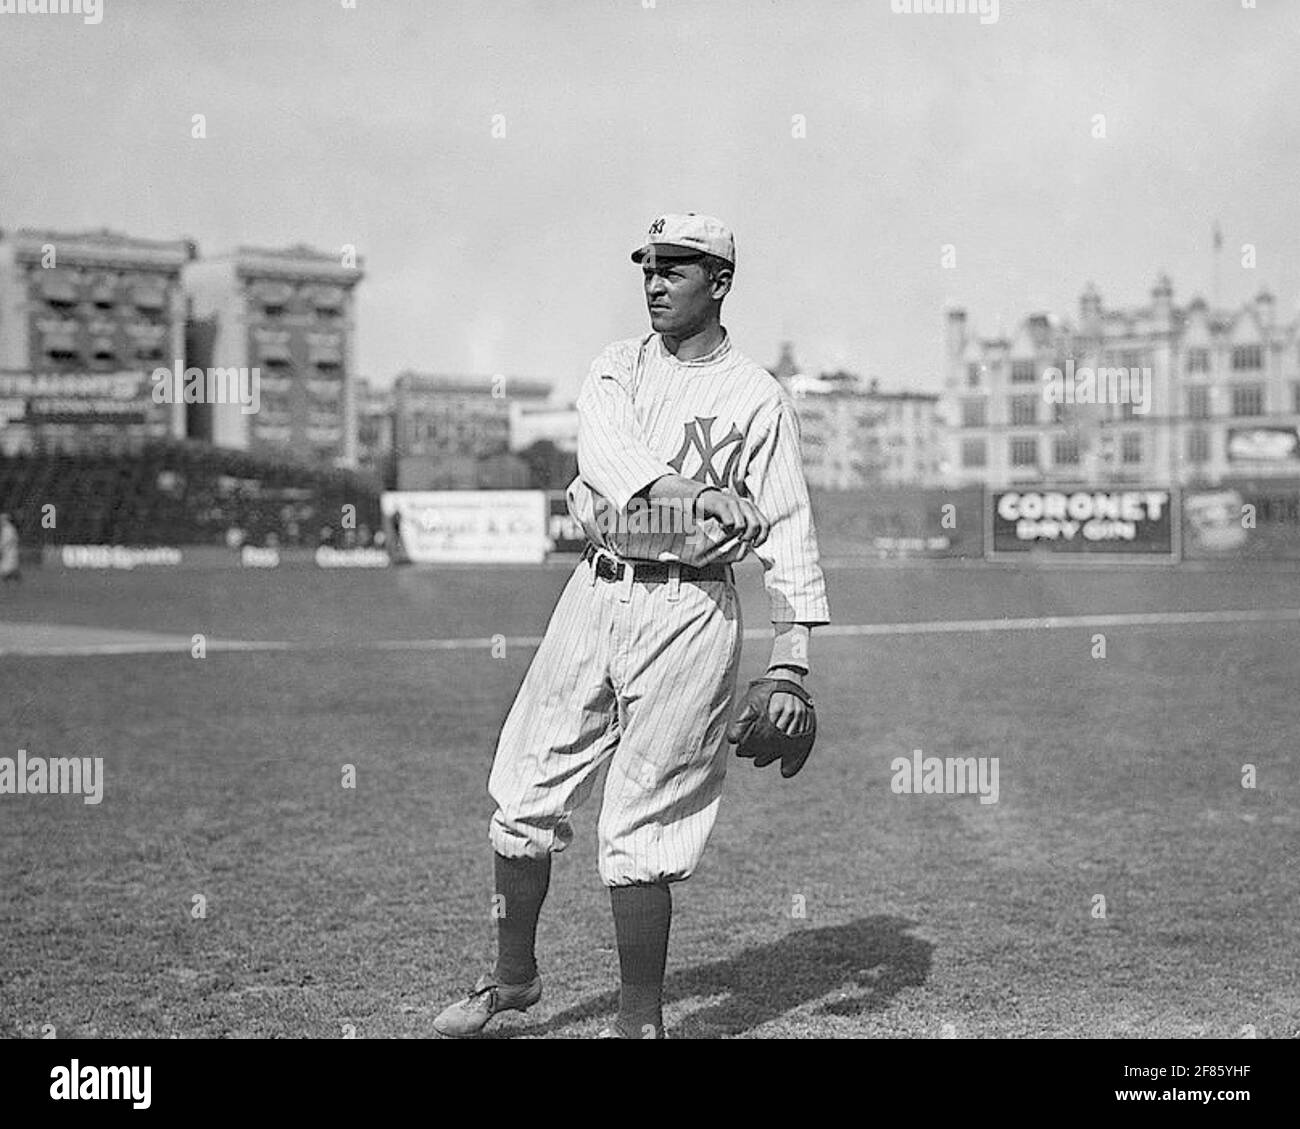 Breaking Down New York Yankees' 1912 Throwback Uniforms